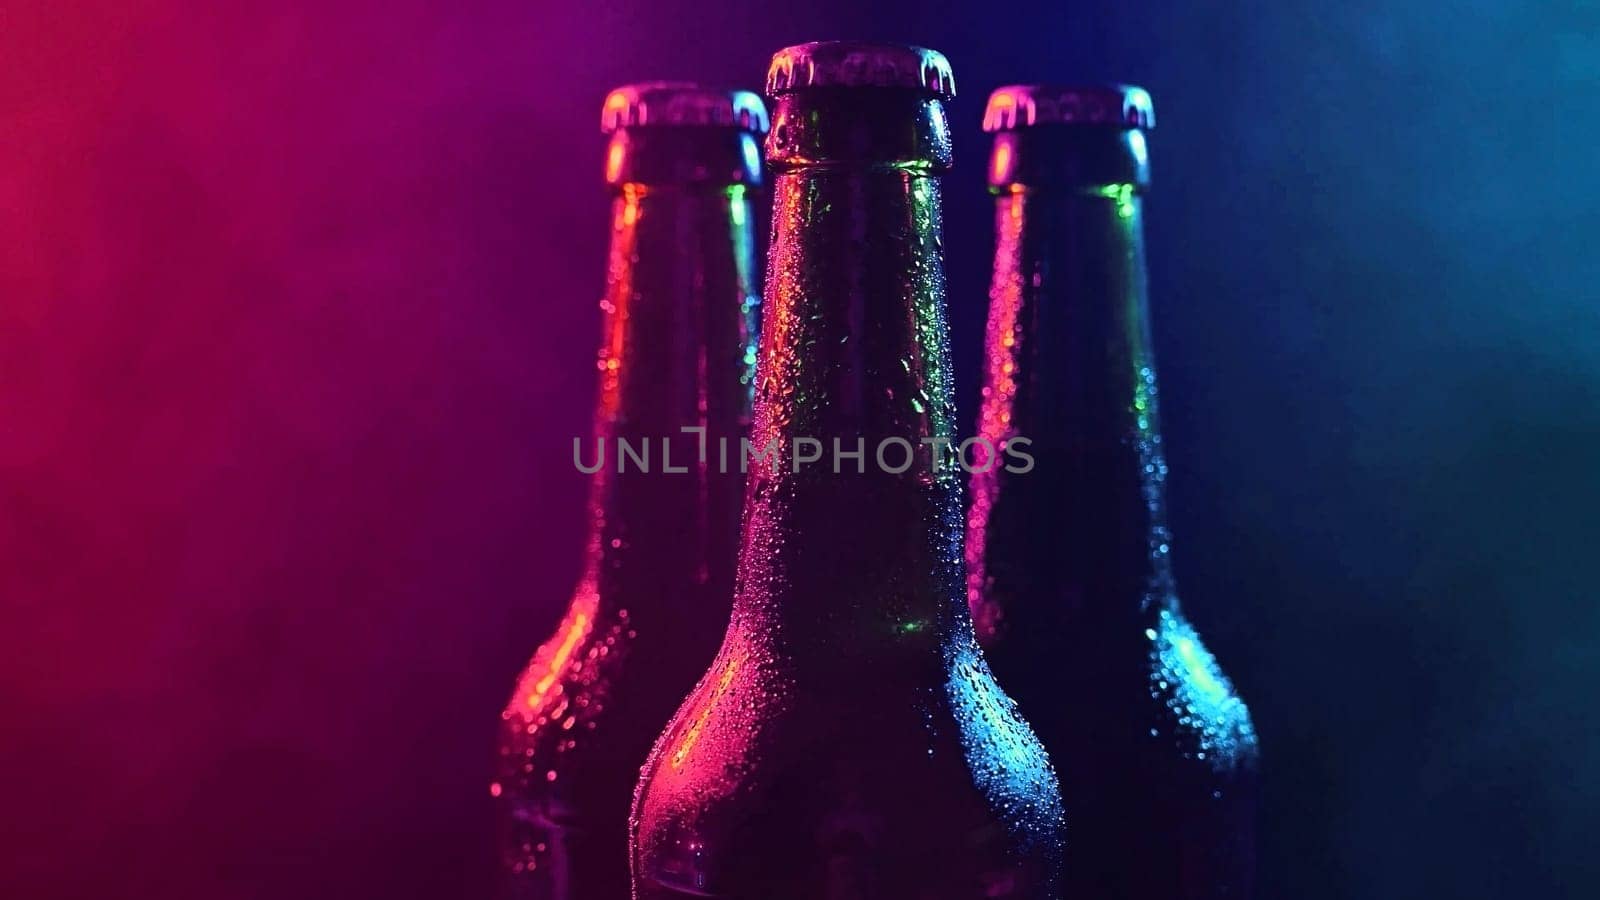 Three bottles of beer spinning in blue pink fog